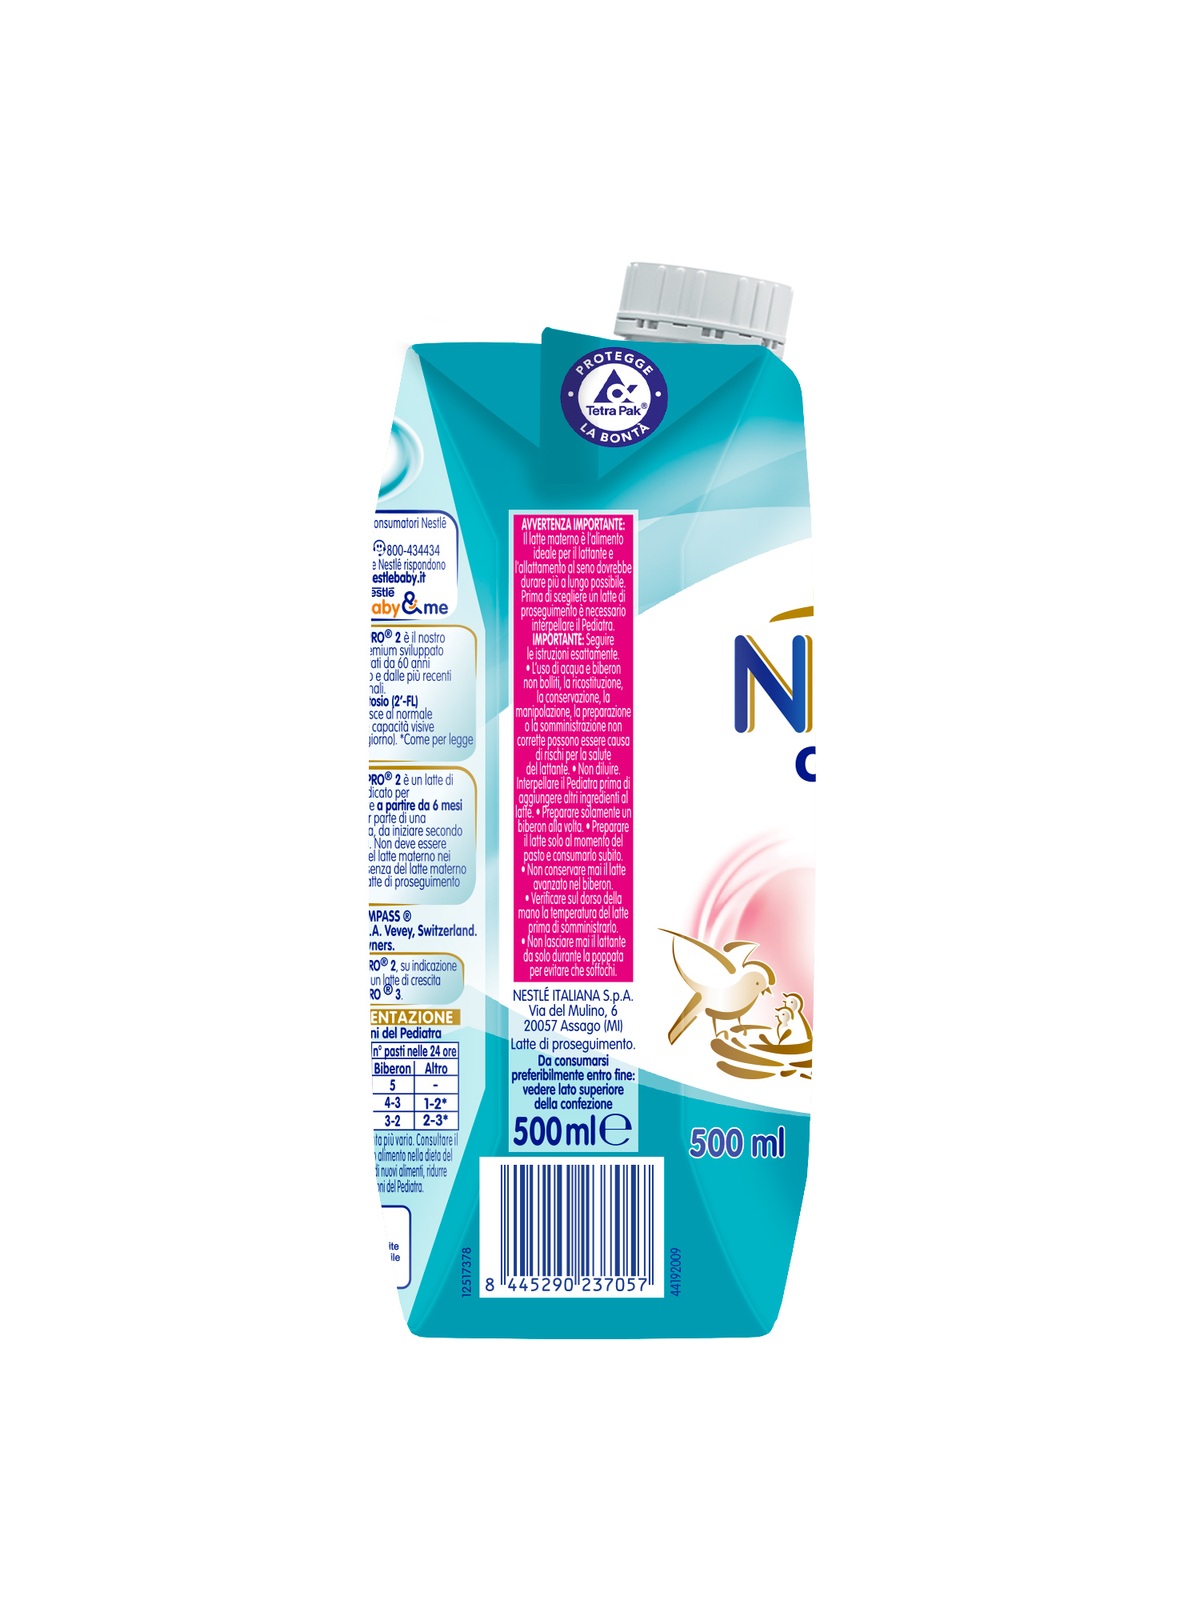 Nestlé nidina optipro 2 da 6 mesi, latte di proseguimento in